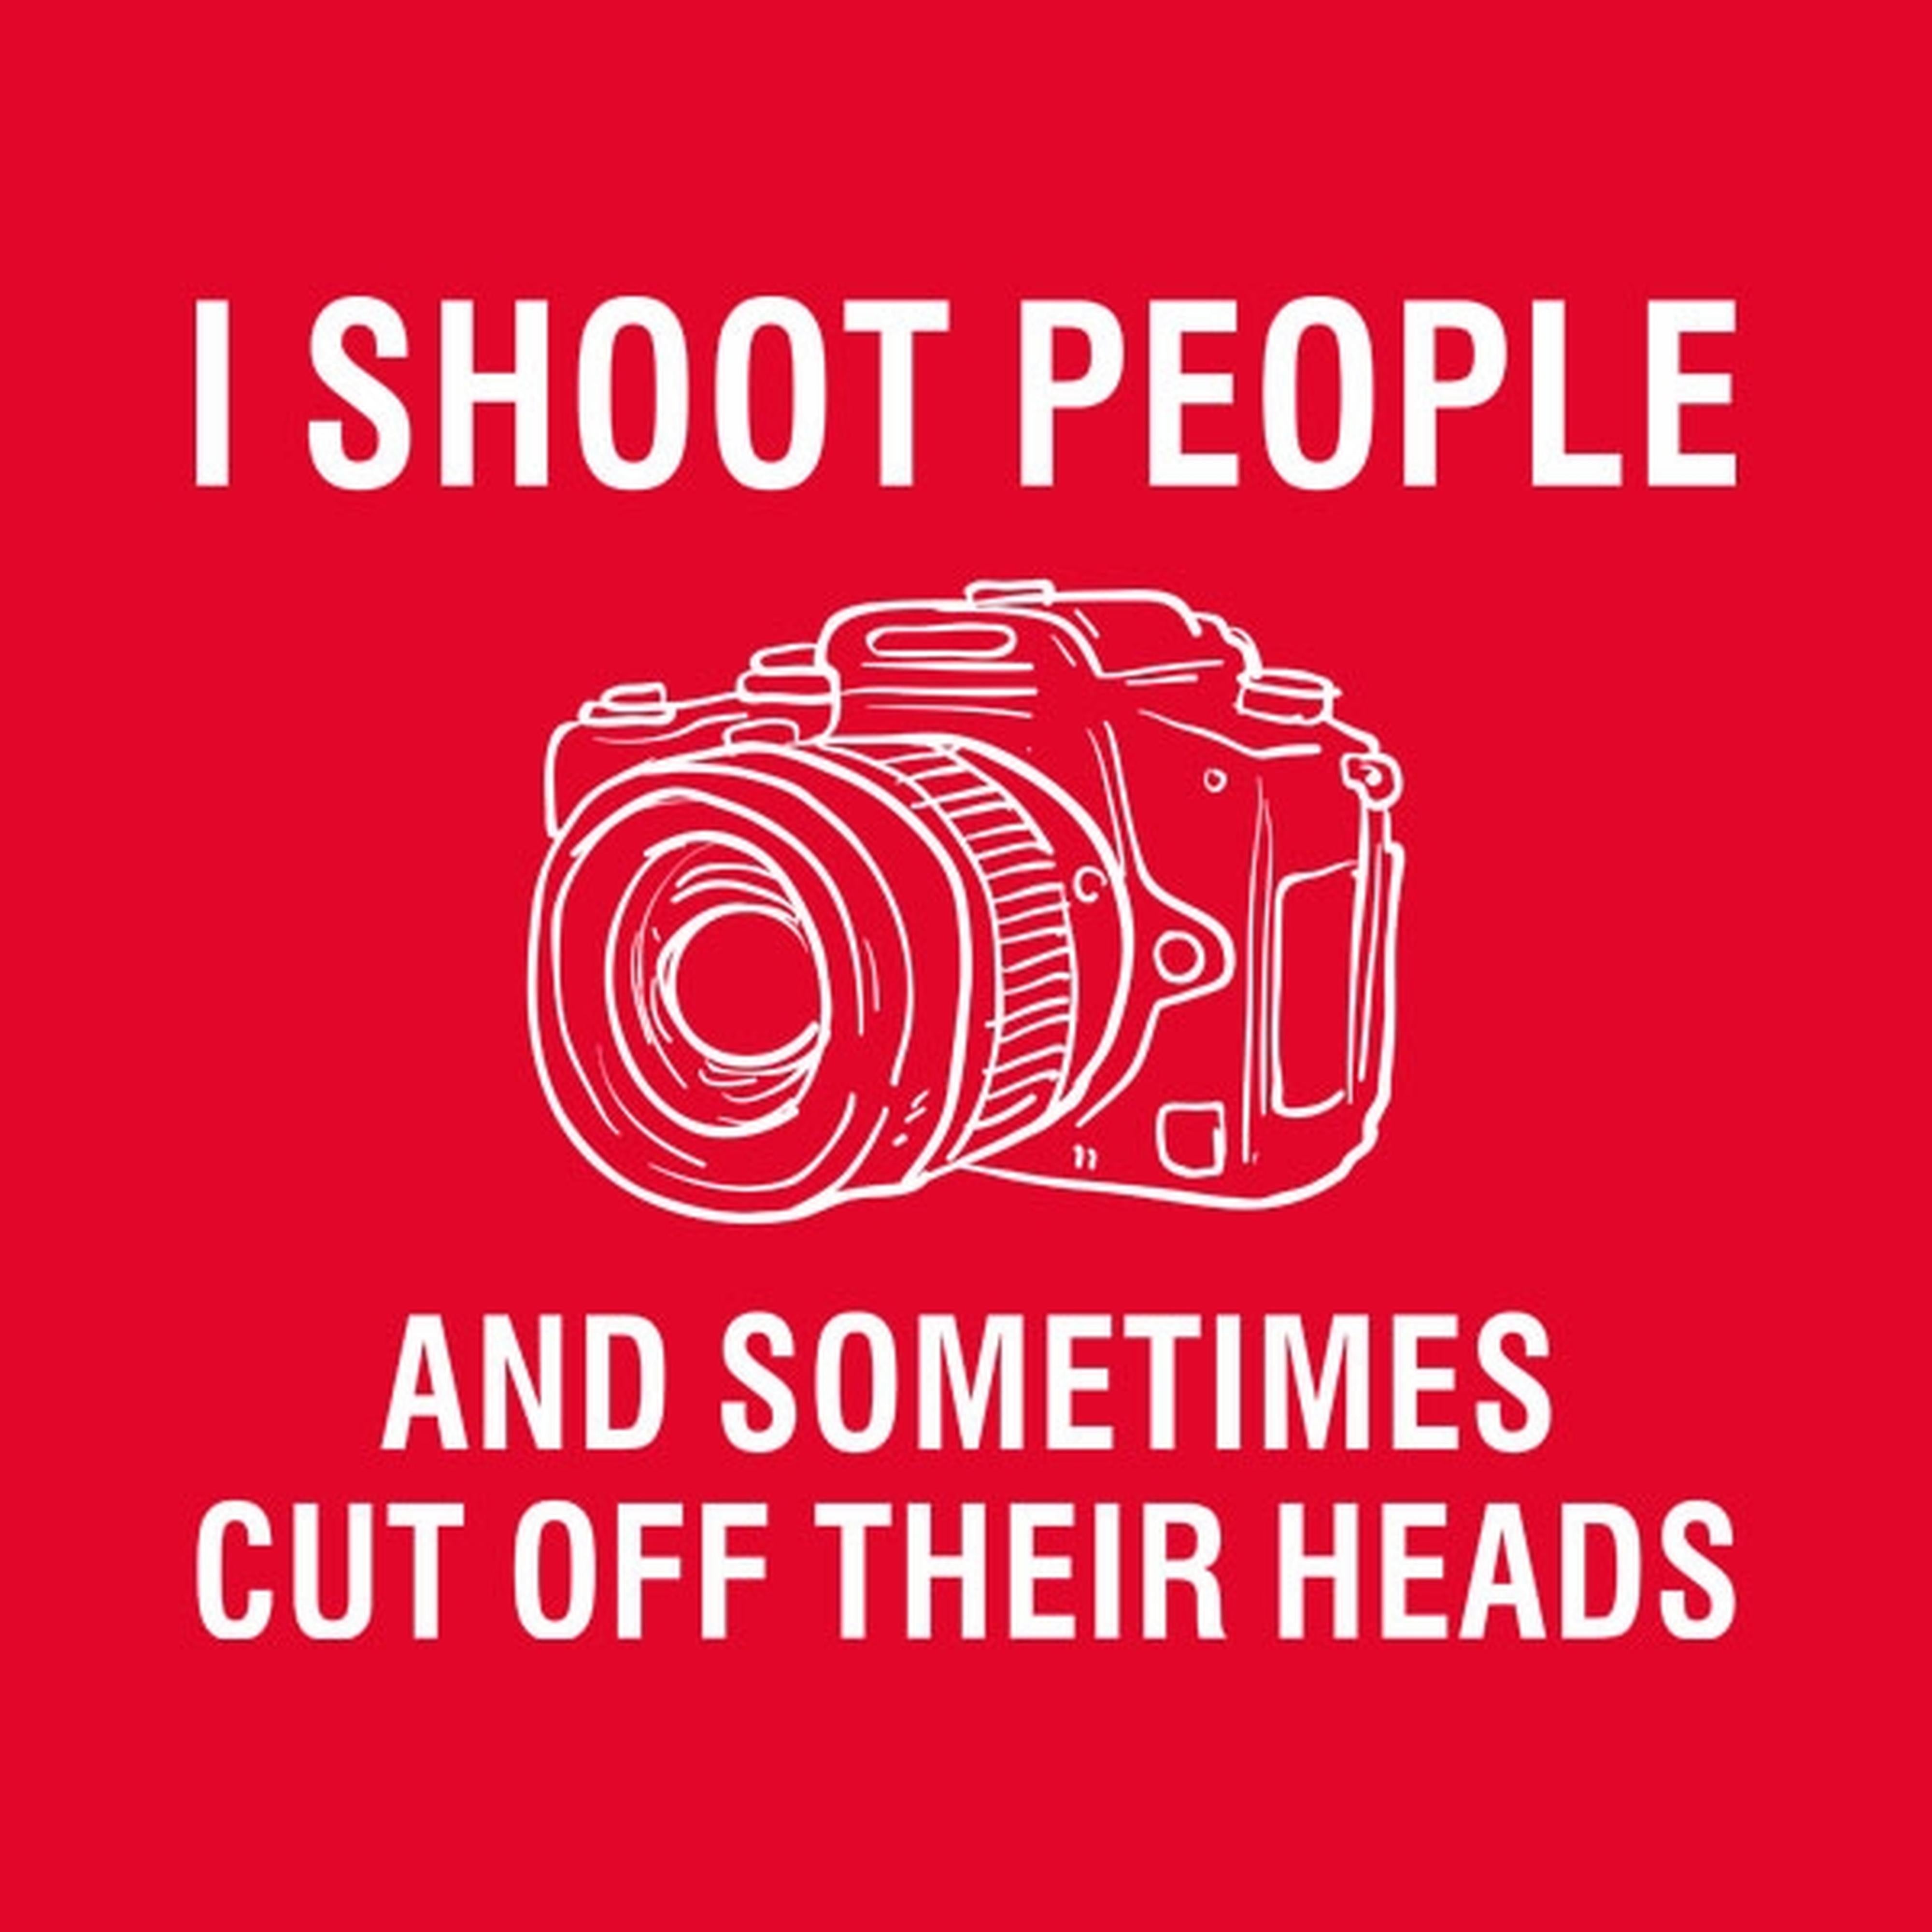 I shoot people - Photographer T-shirt